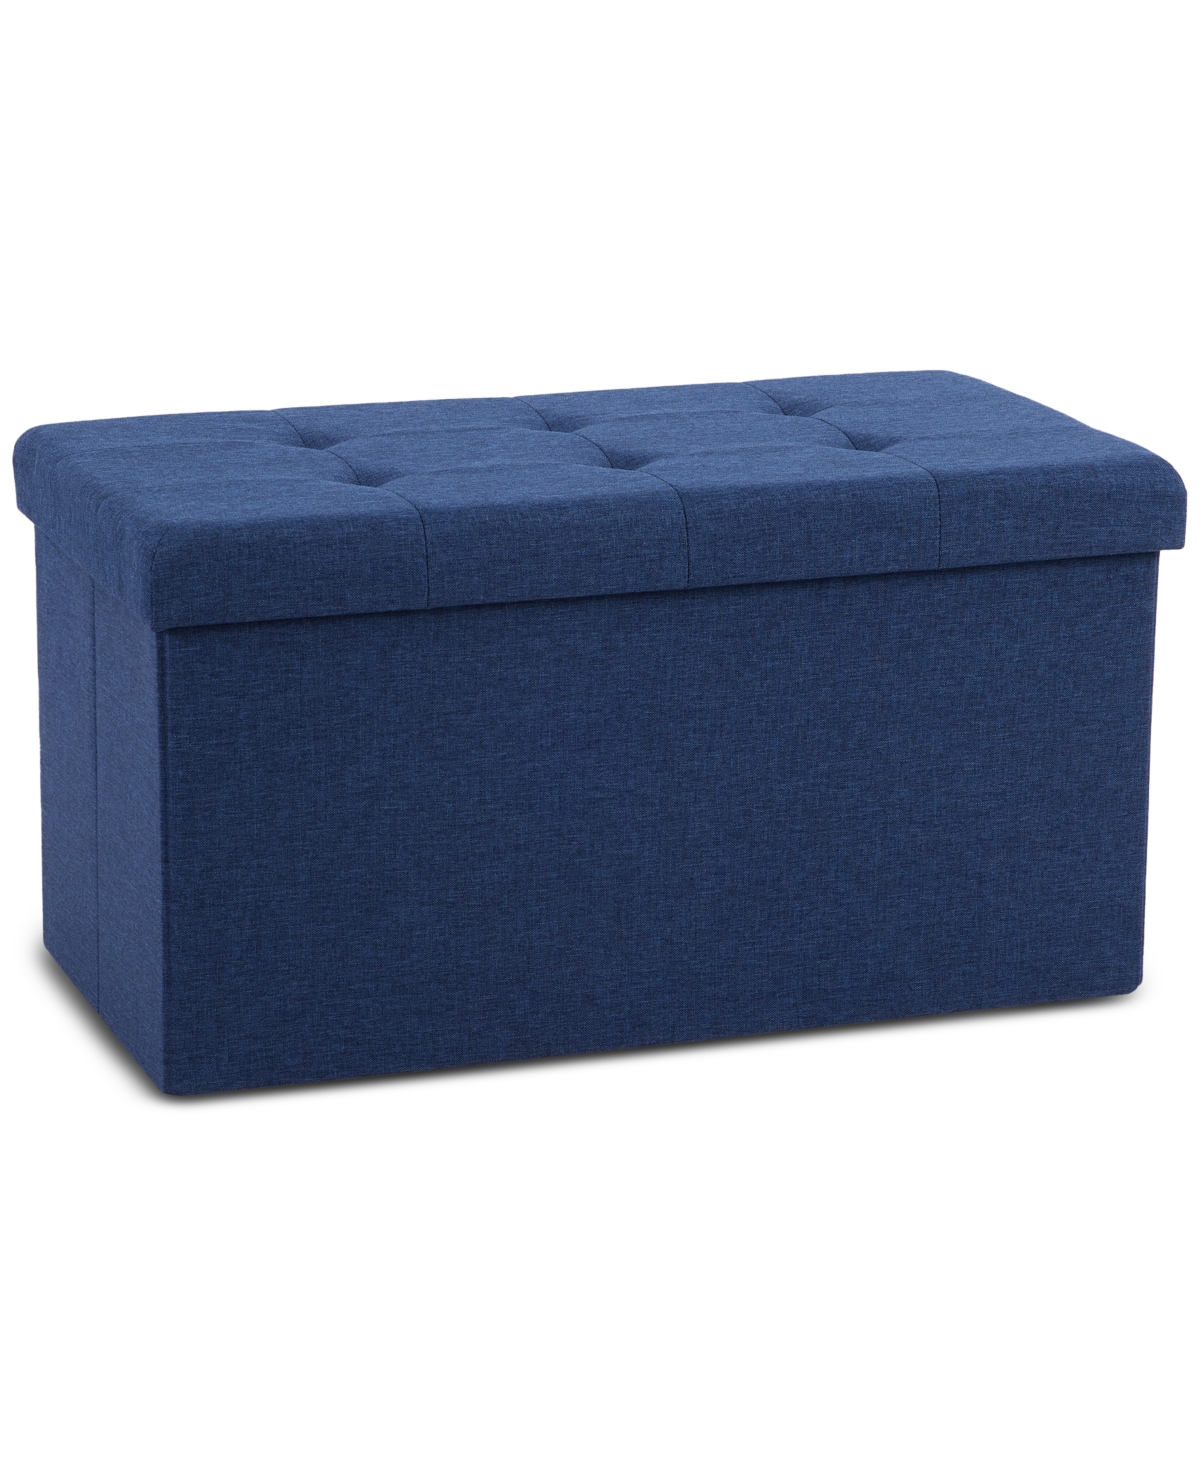 Foldable Tufted Storage Bench Ottoman - Dark Blue